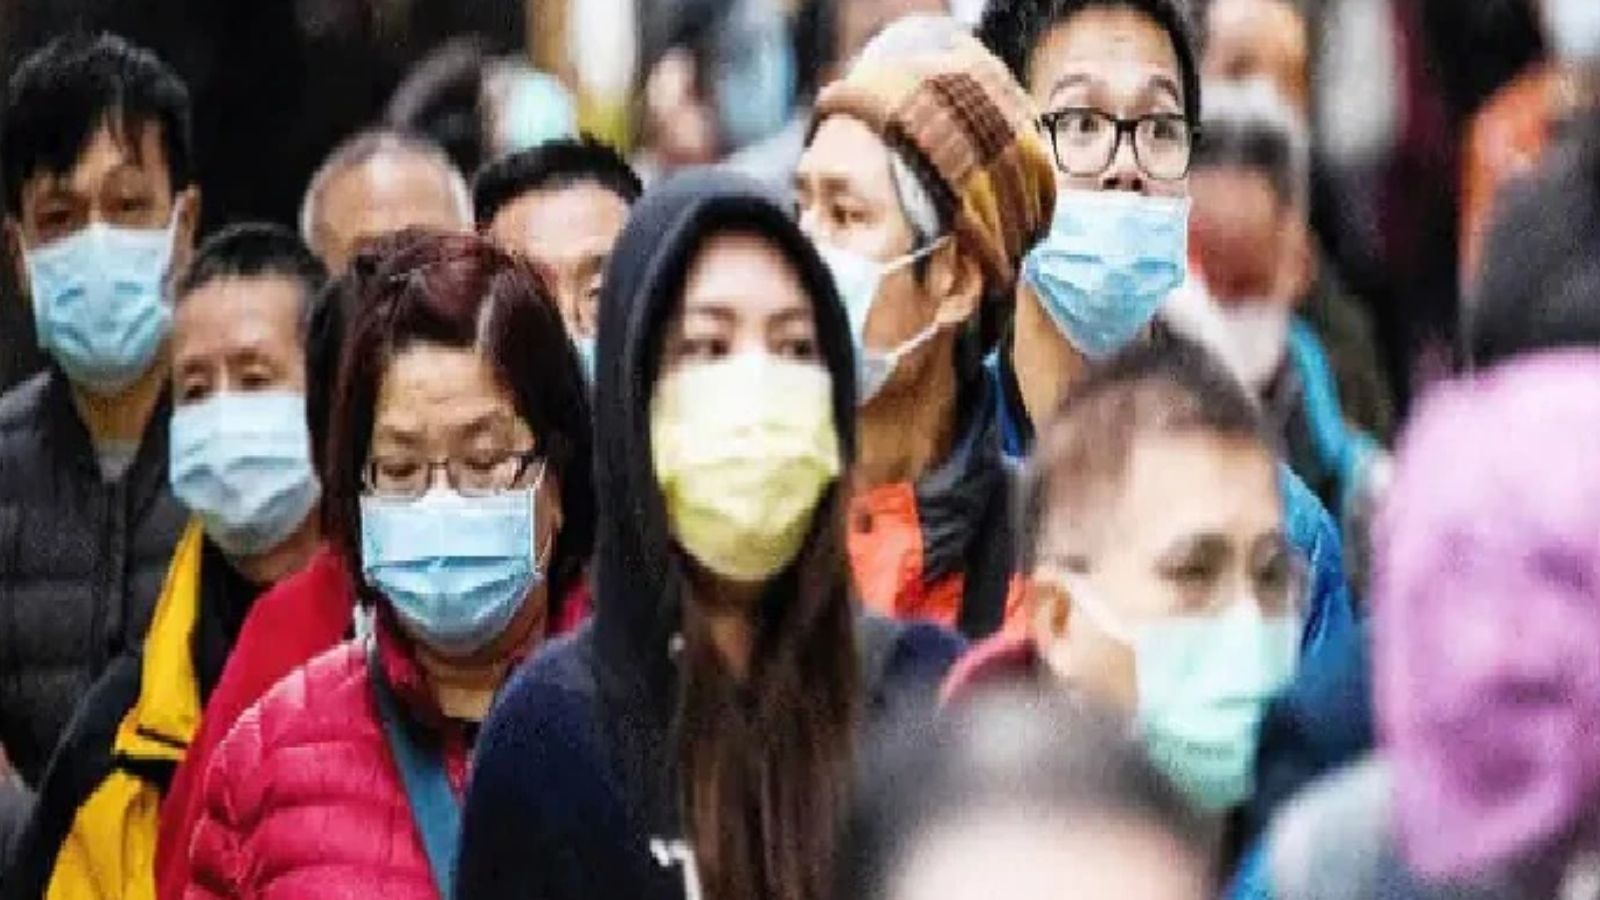 China Places 17 Million Residents Of Shenzhen Under Covid Lockdown: Govt | Covid Lockdown In China: বাড়ছে করোনা, চিনের নতুন লকডাউন ঘোষণায় শেনজেনে ঘরবন্দি ১৭ মিলিয়ন মানুষ